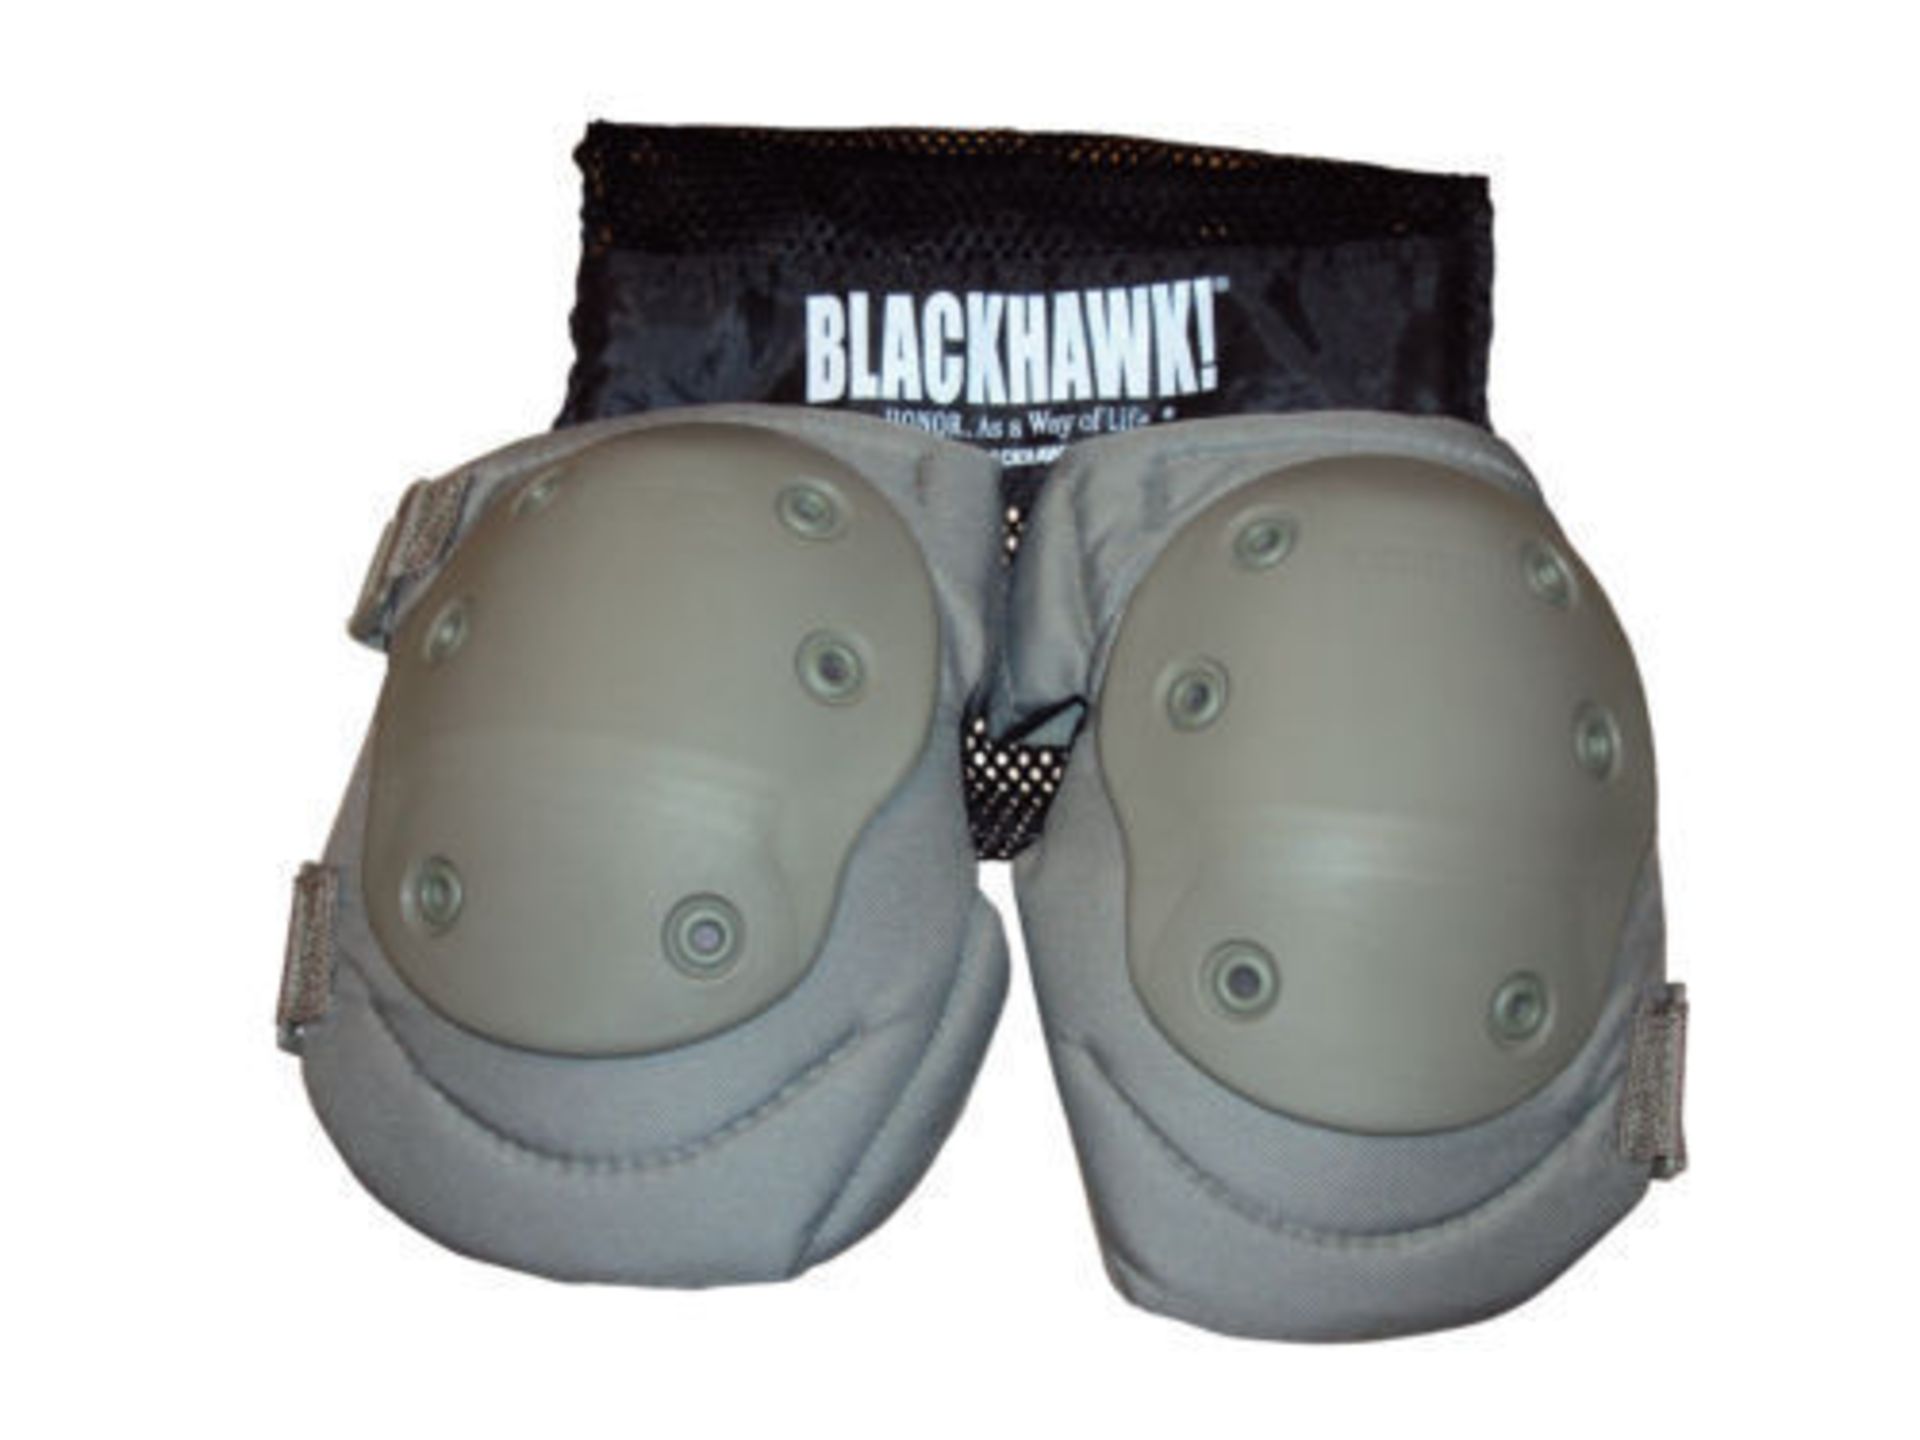 Pack of 10 Blackhawk knee Pads - Brand New